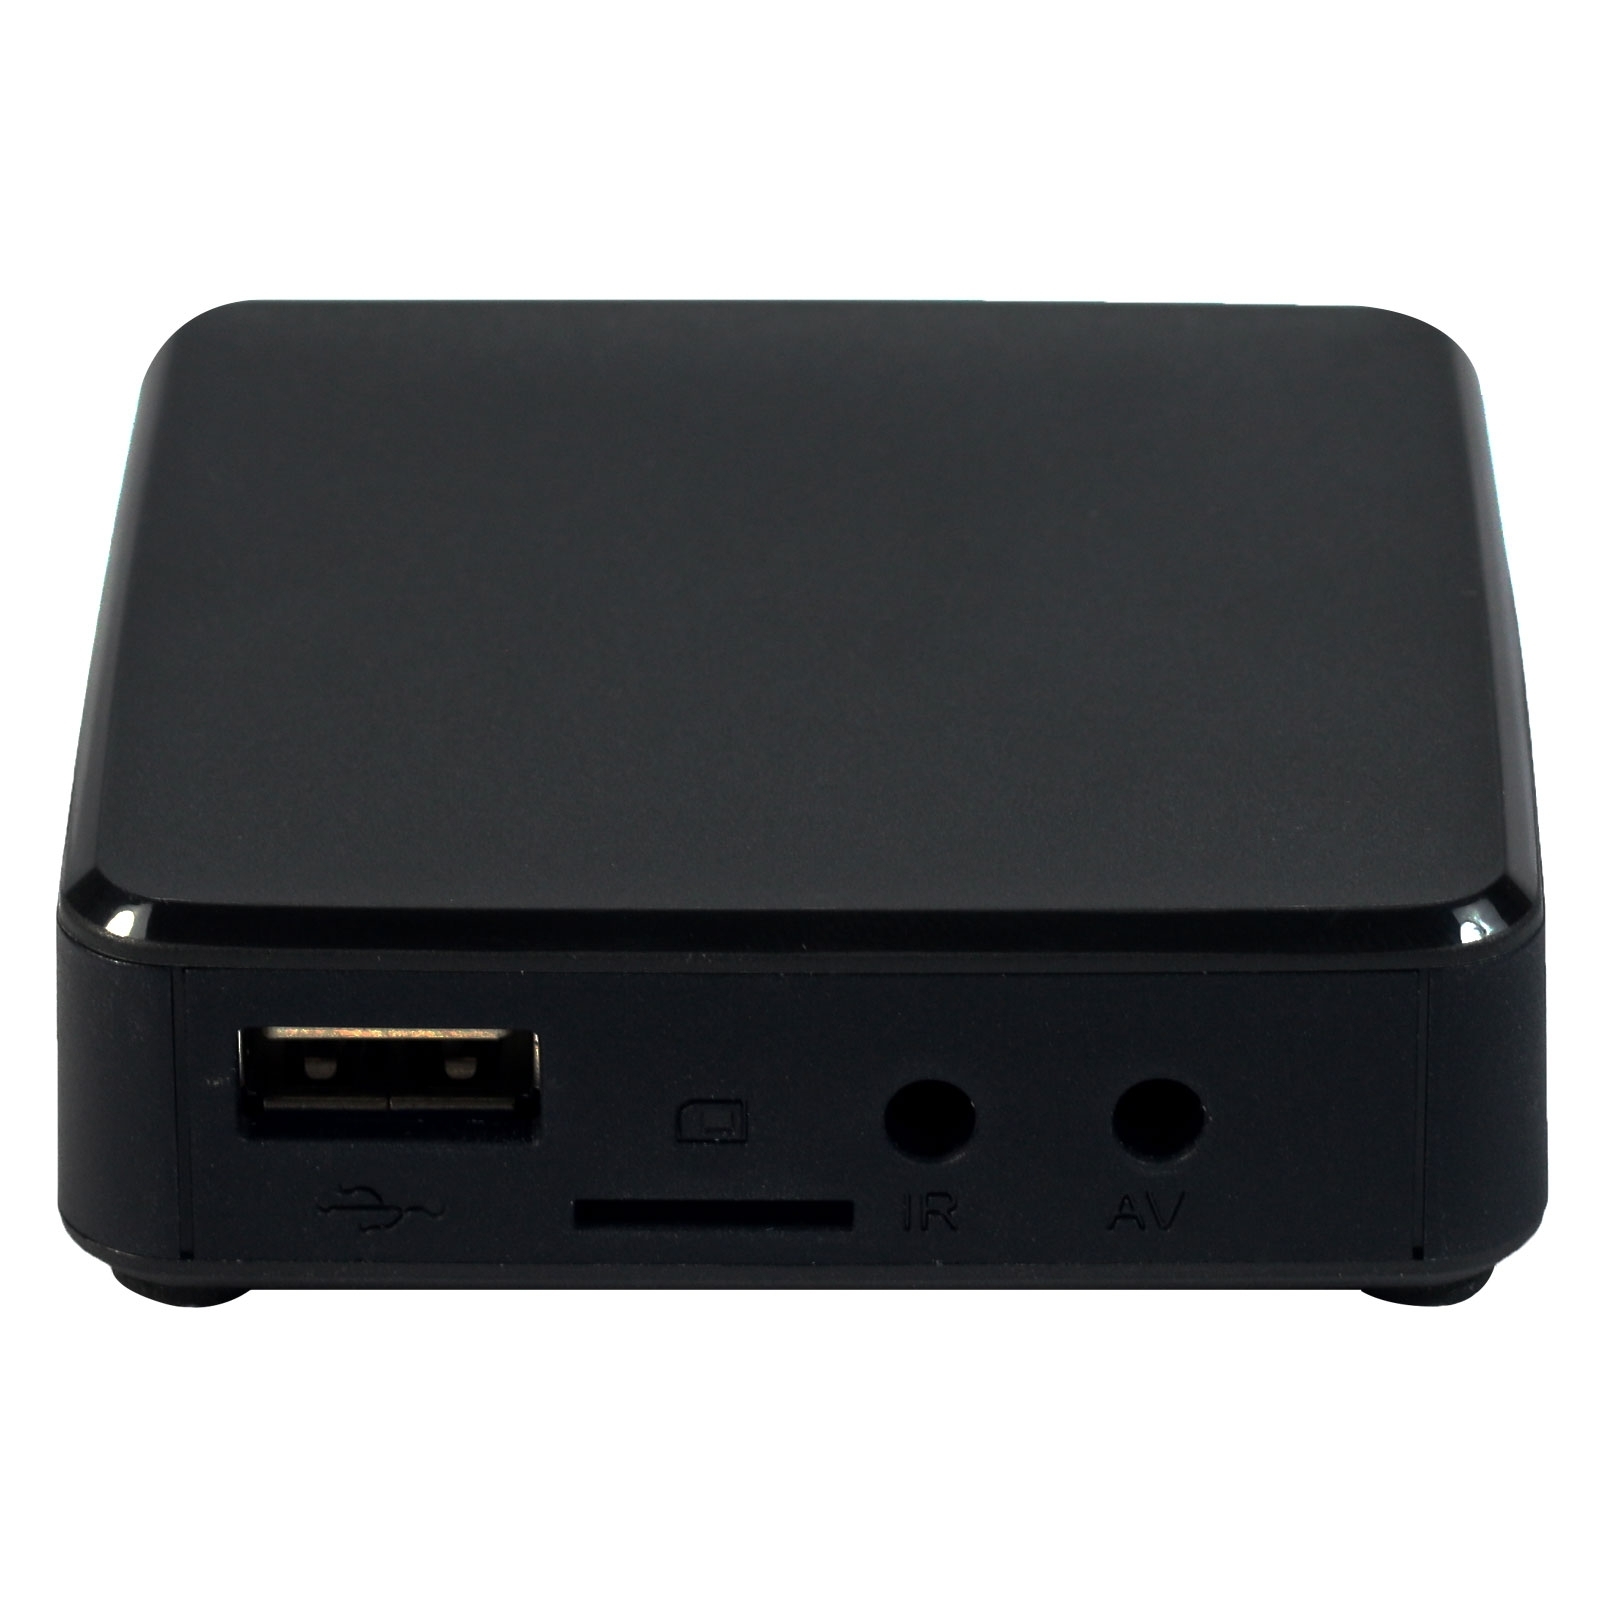 TVIP S-Box v.530 4K UHD IP Mediaplayer (H.265/H.264, MicroSD, HDMI, LAN, USB, schwarz)